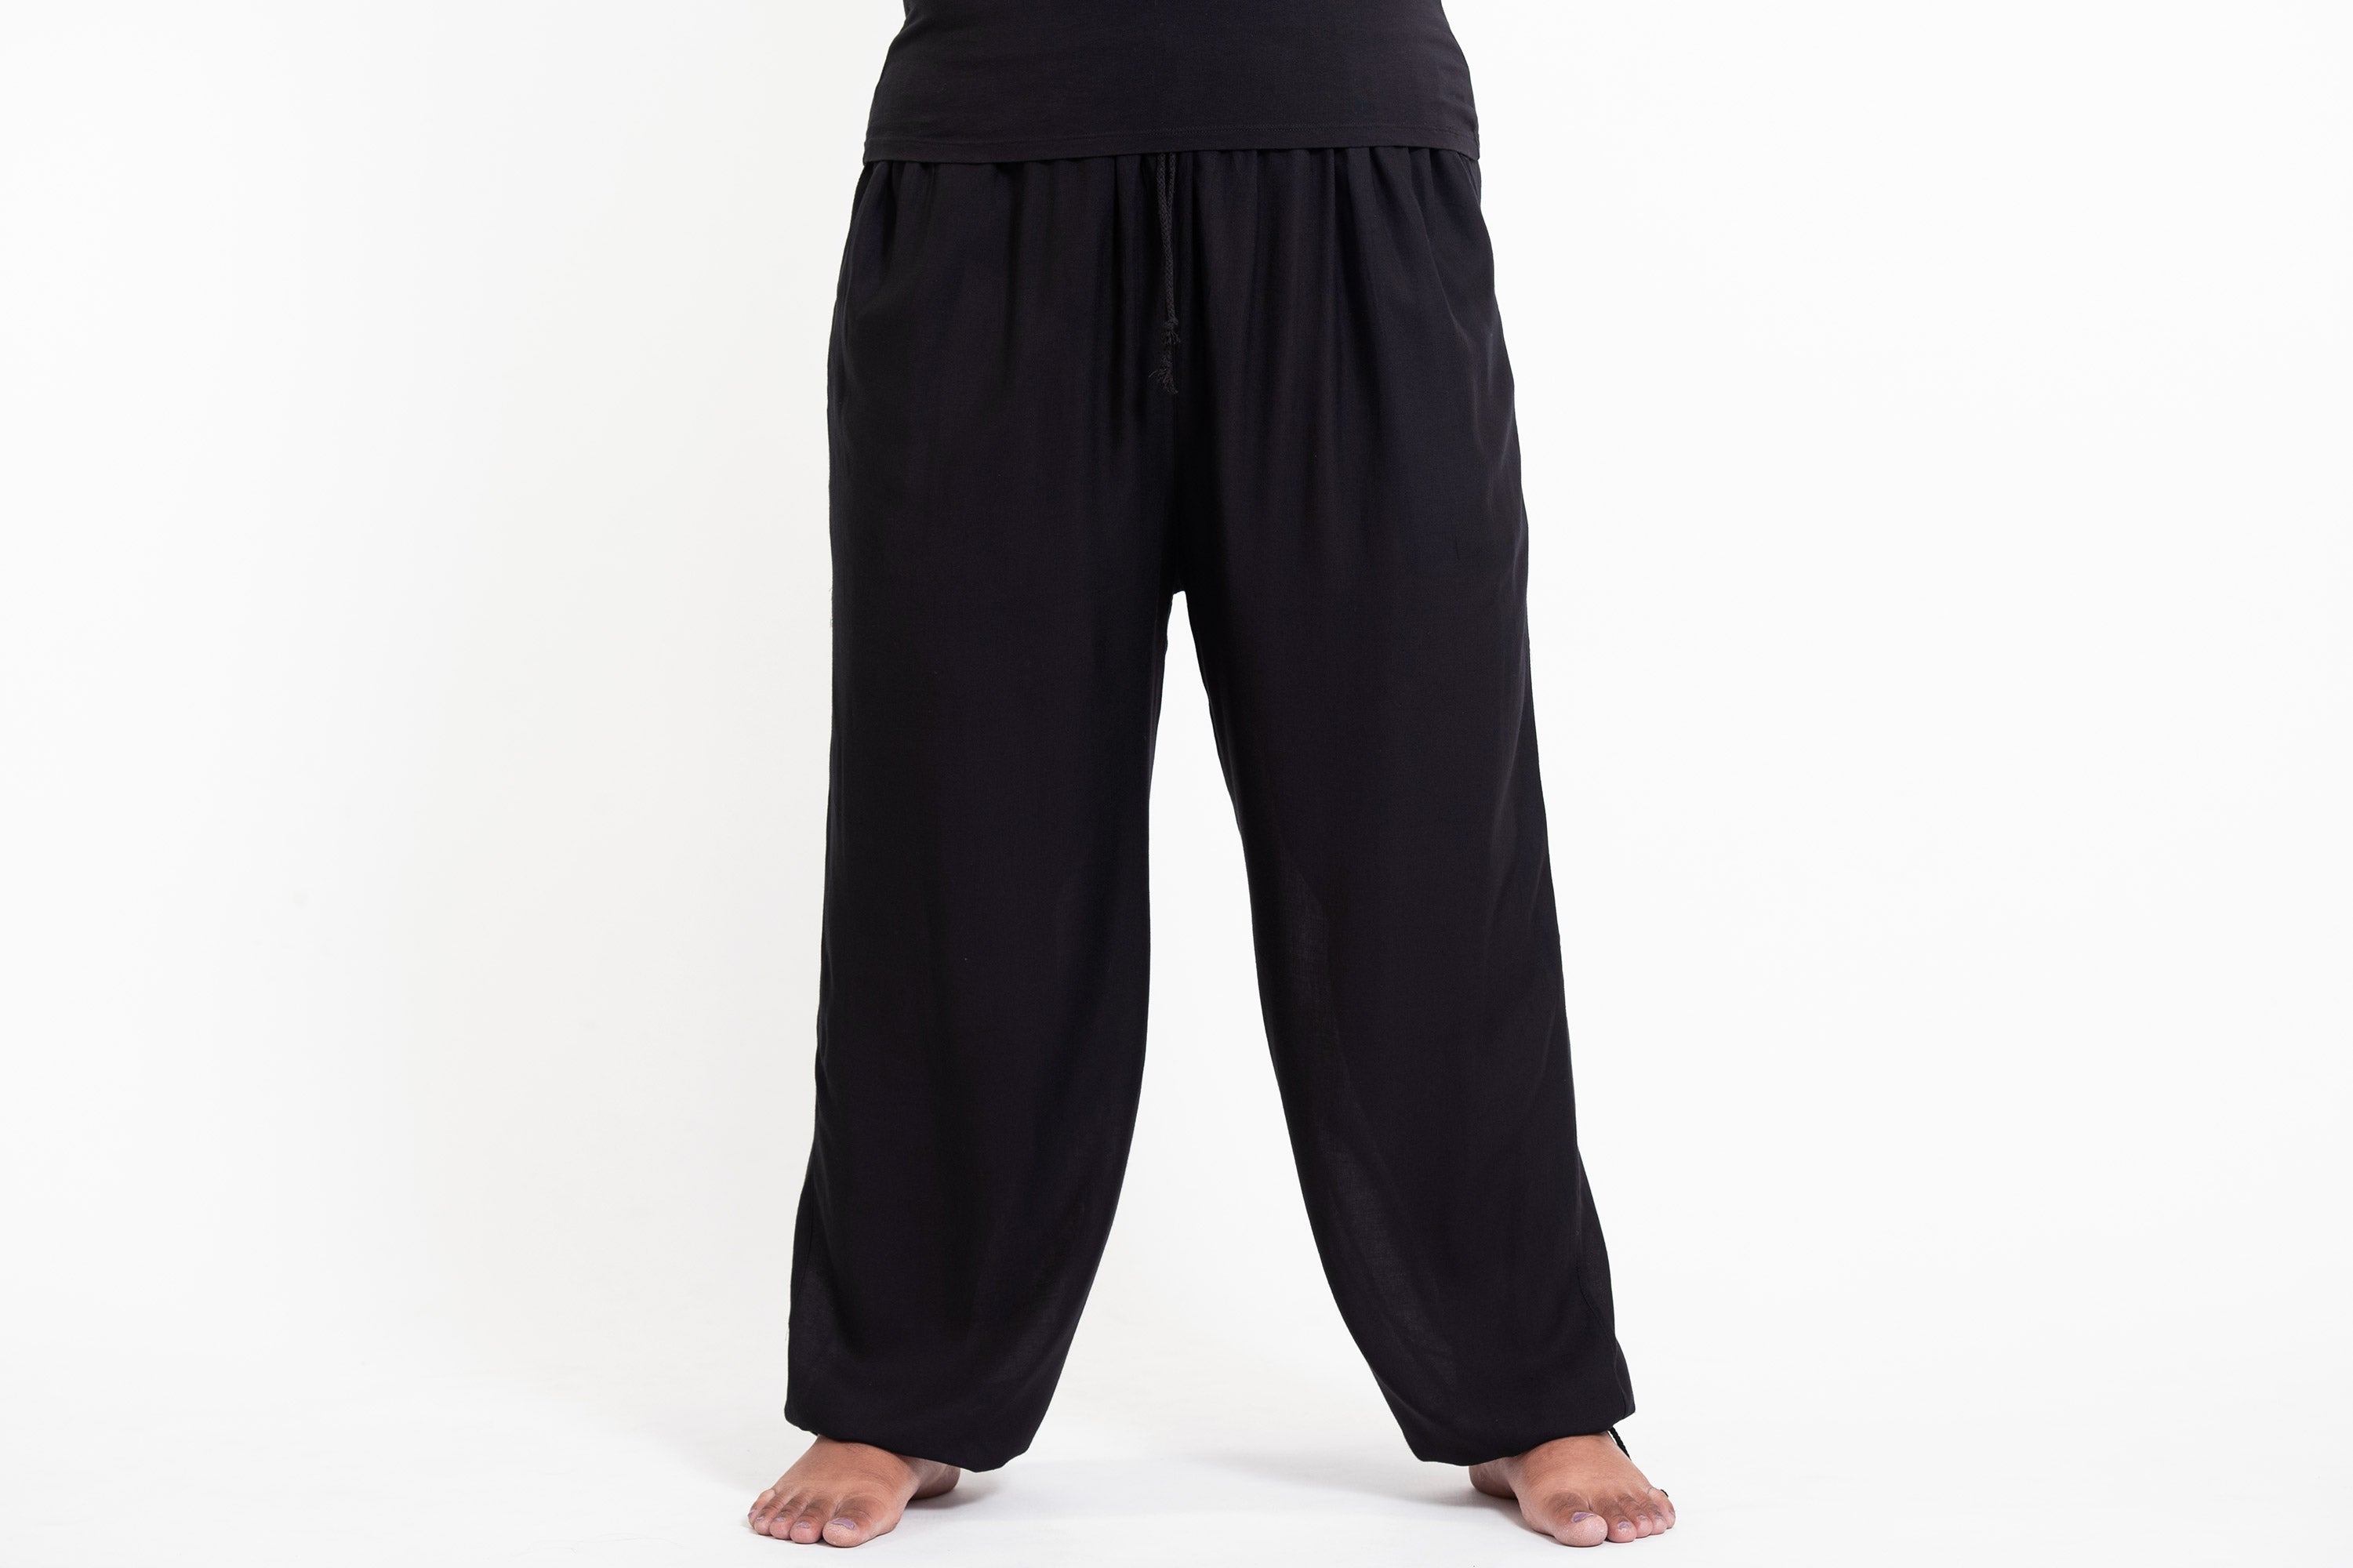 Buy Lastinch Women's Plus Size Cotton Sky Blue Stripes Harem Pant  (XX-Small) at